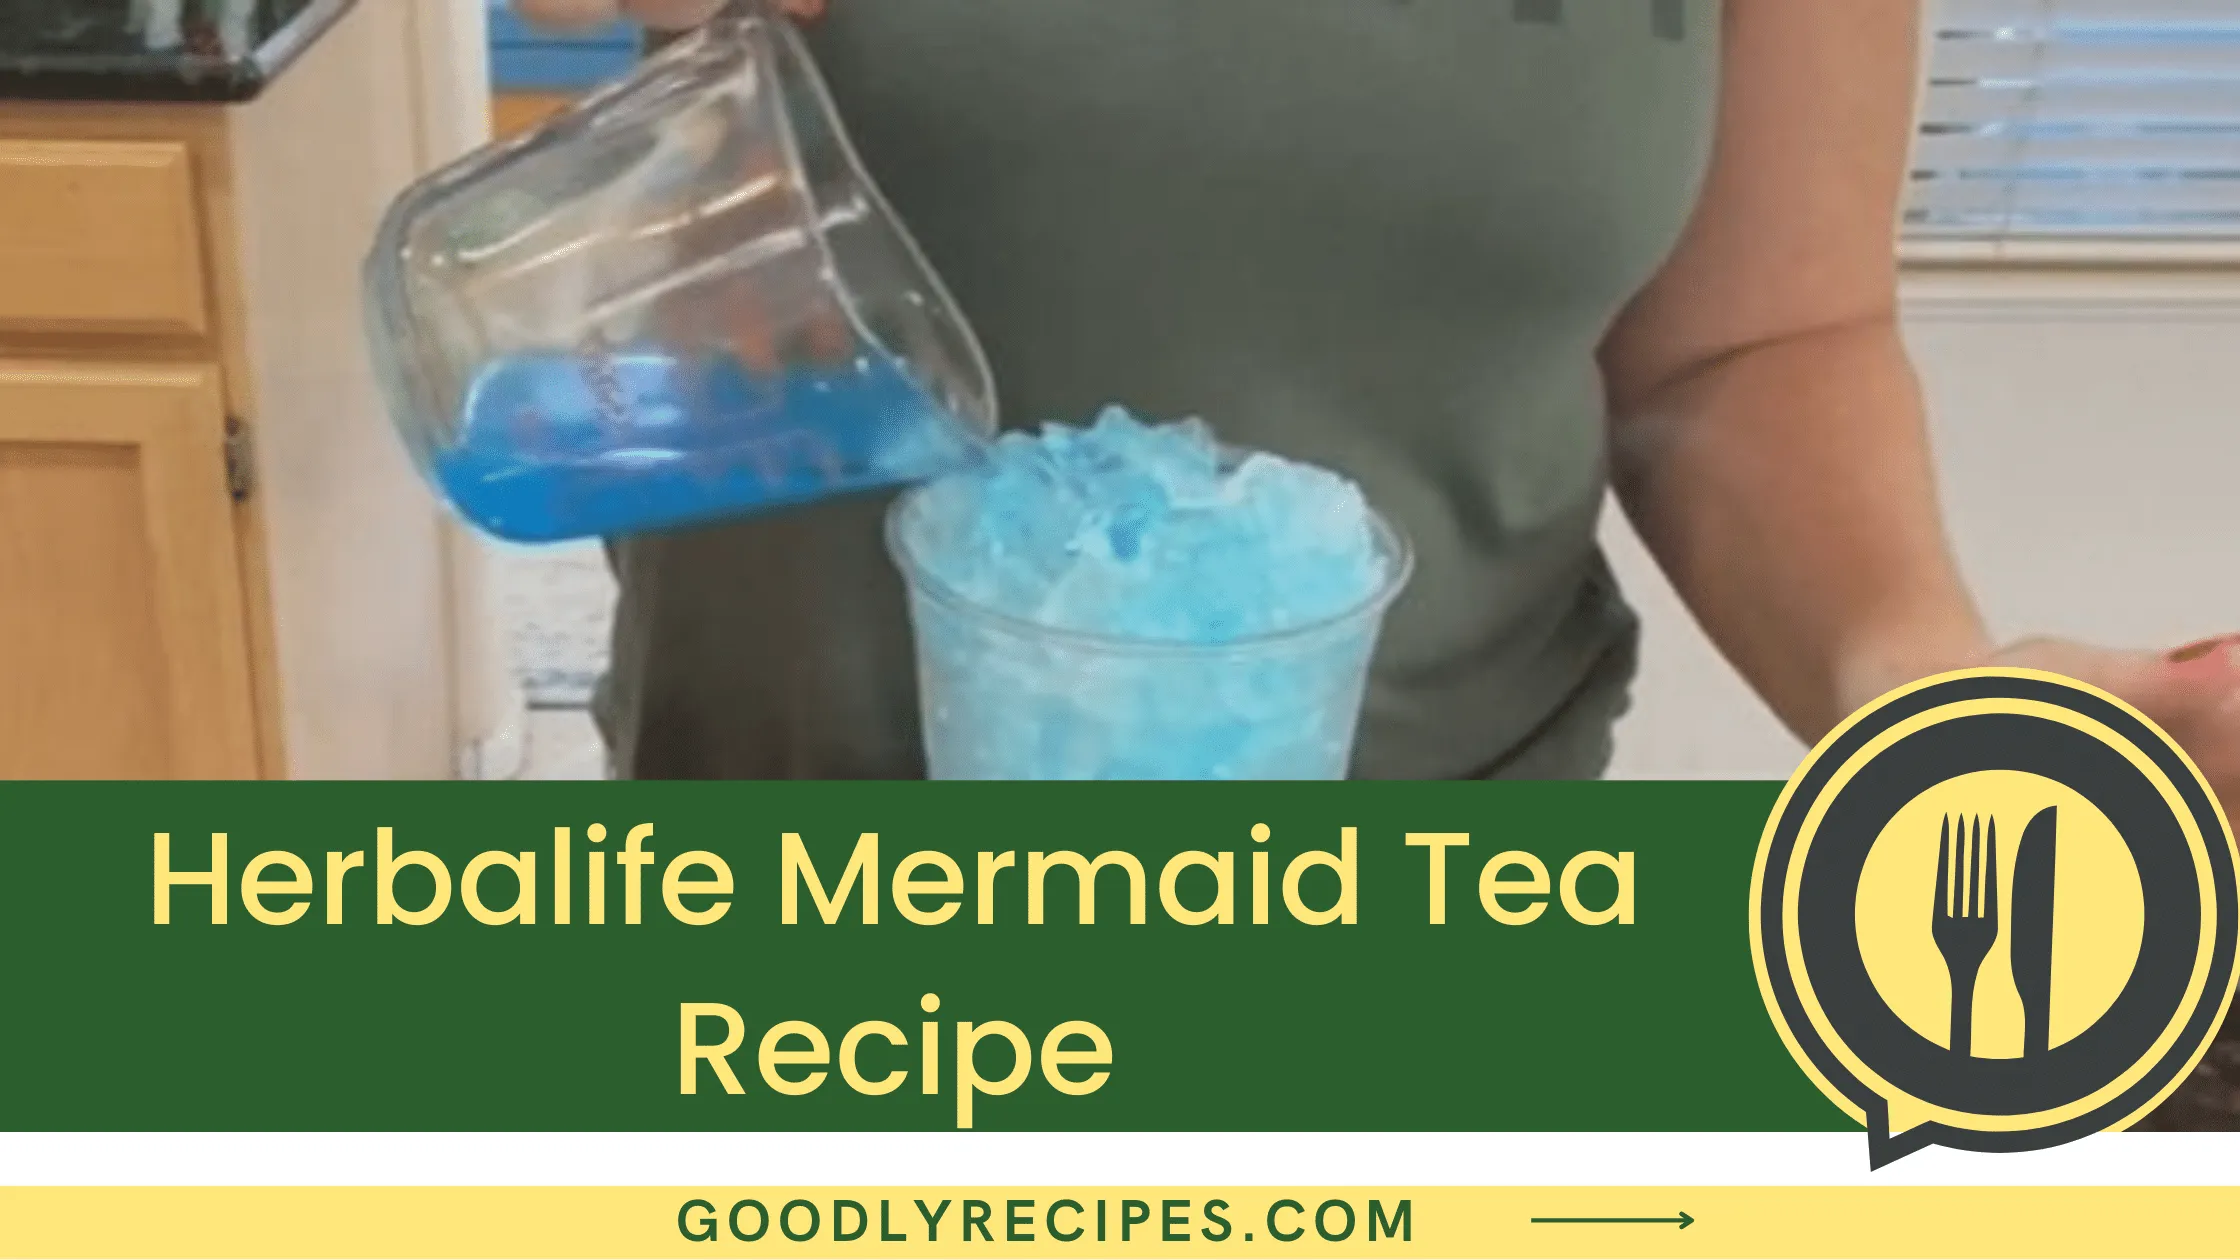 Herbalife Mermaid Tea Recipe